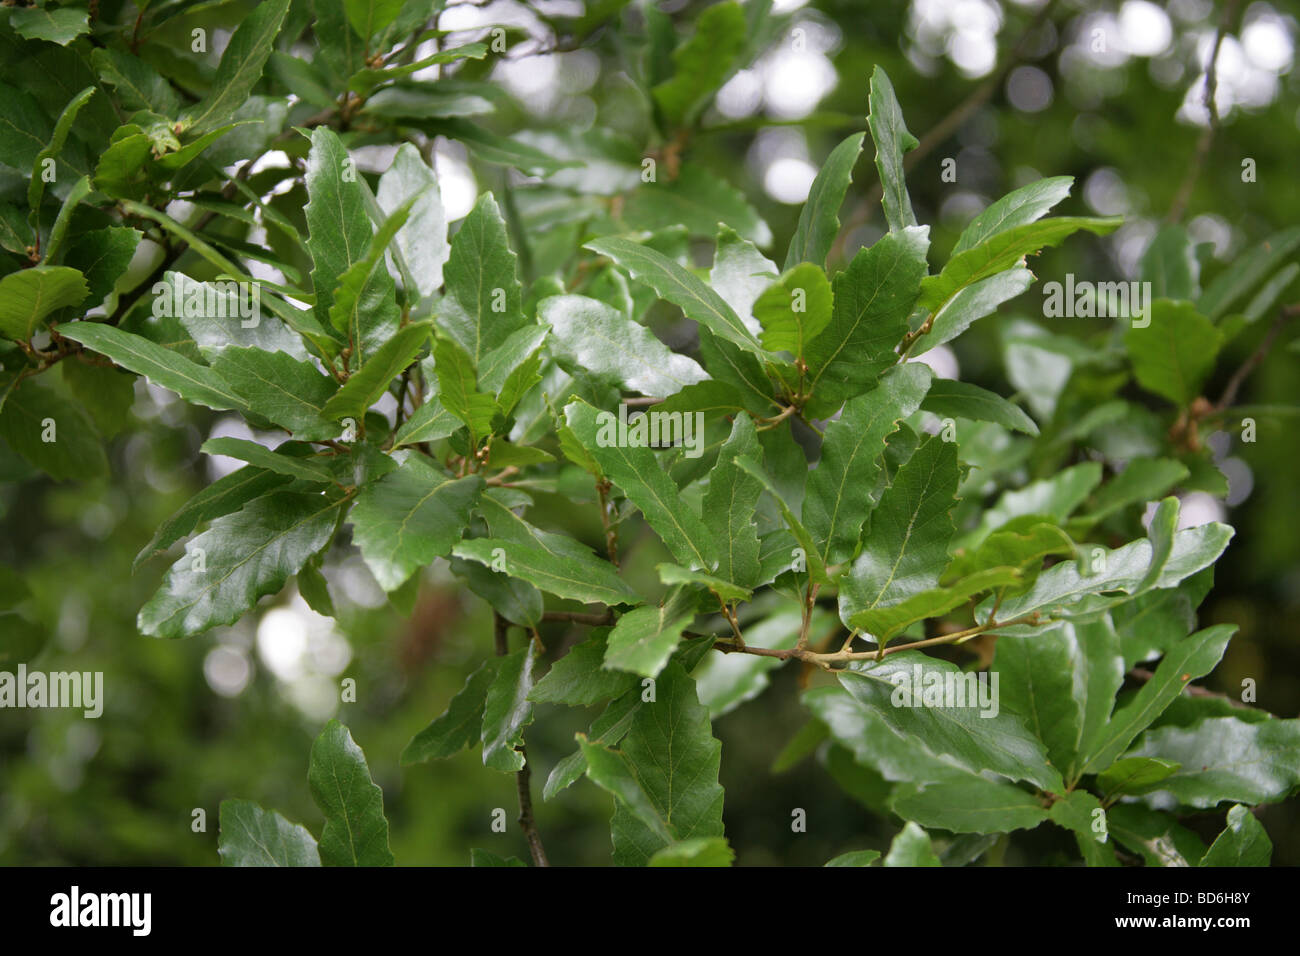 Macedonian Oak Tree Leaves, Quercus trojana syn Q. macedonicus, Fagaceae, South East Europe. Stock Photo